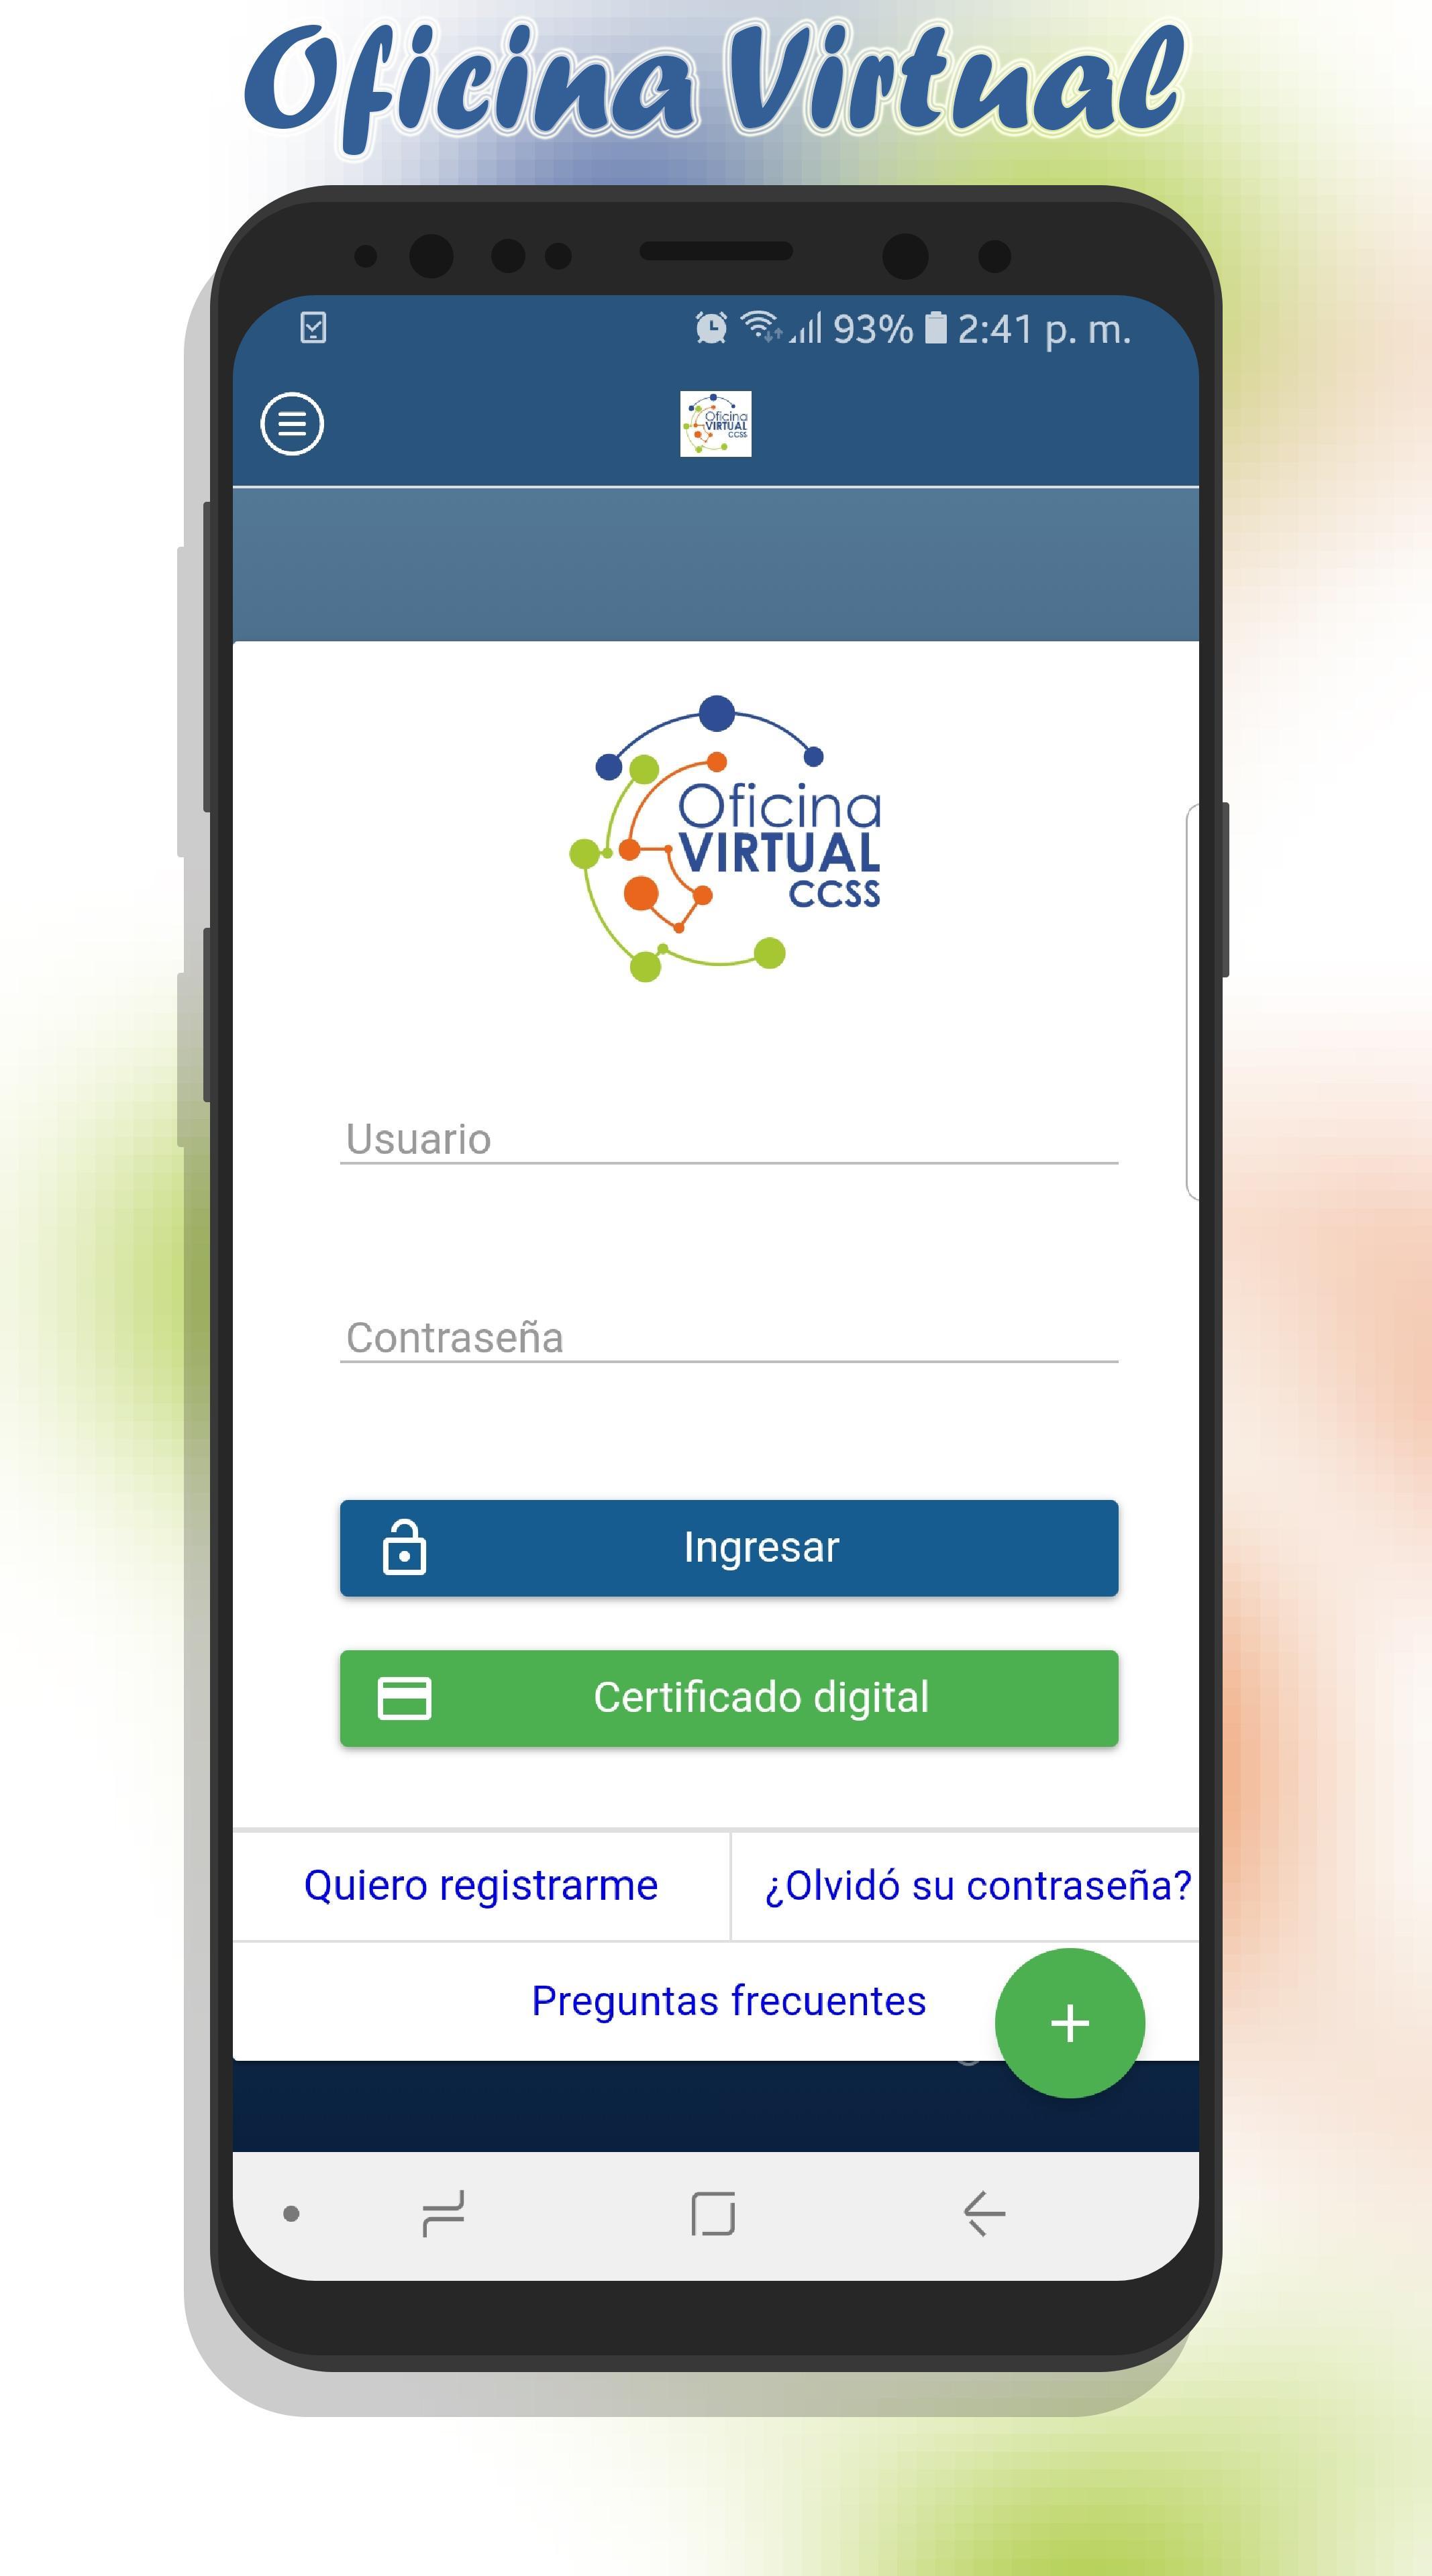 Oficina Virtual CCSS APK voor Android Download